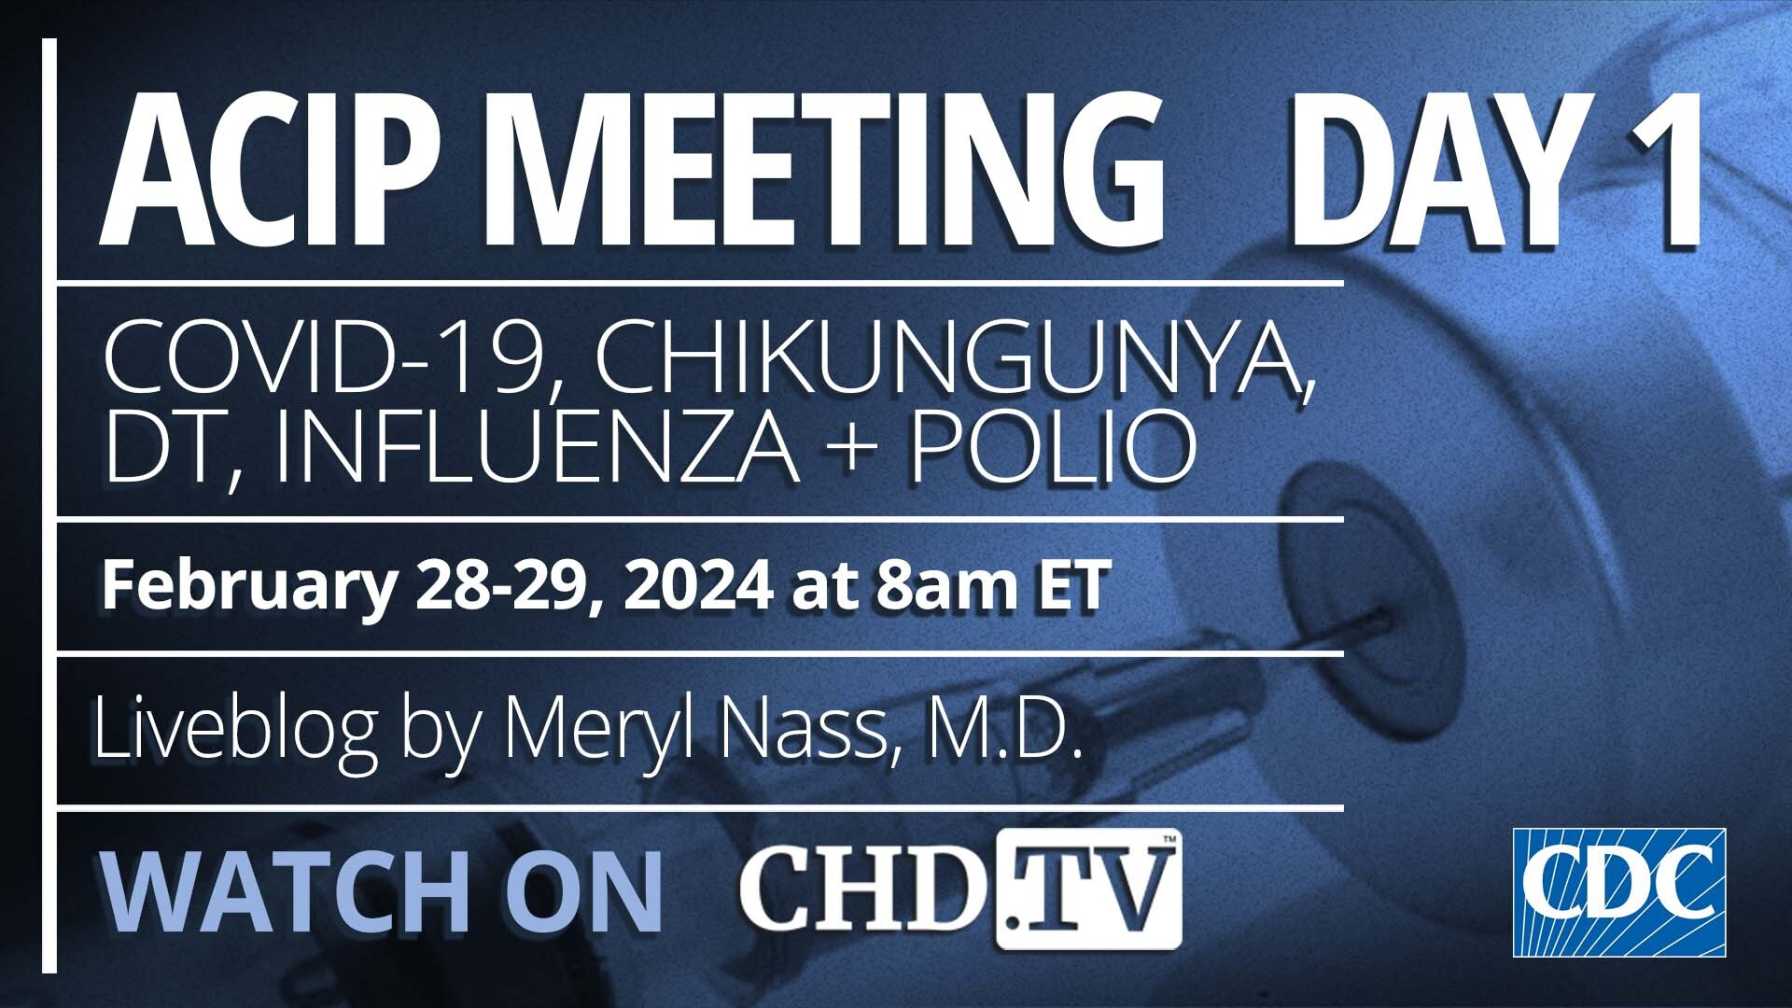 CDC ACIP Meeting COVID19, Chikungunya, Influenza + Polio Feb 28